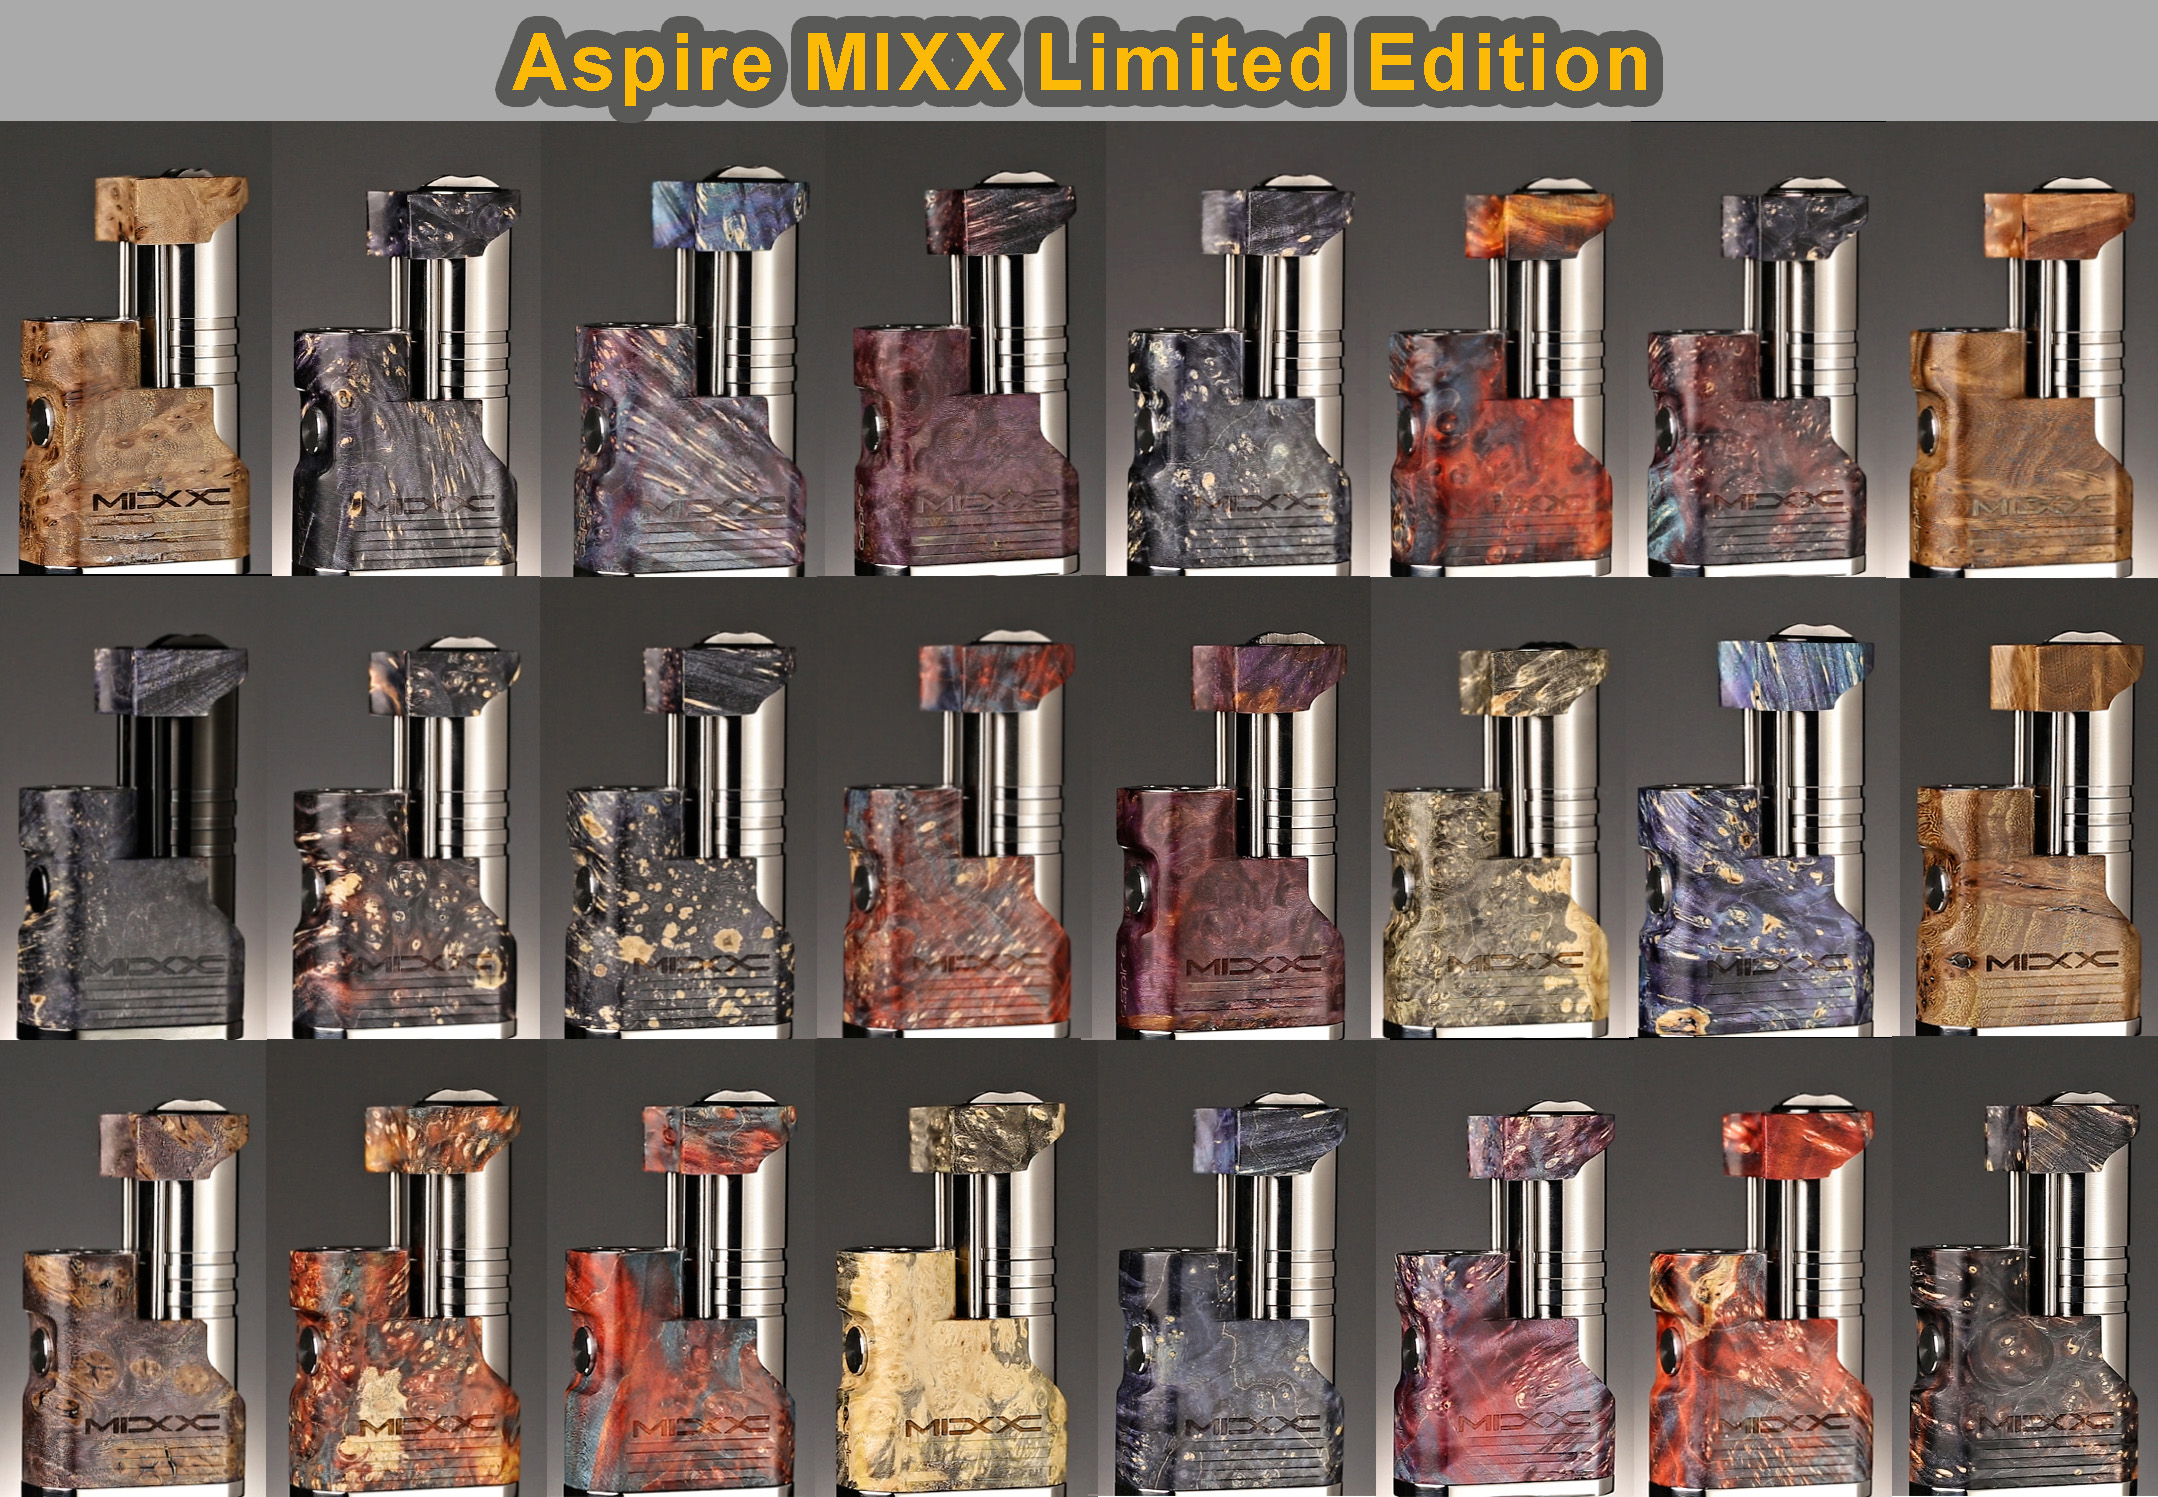 mixx-limited-edition-1-jpg.230148